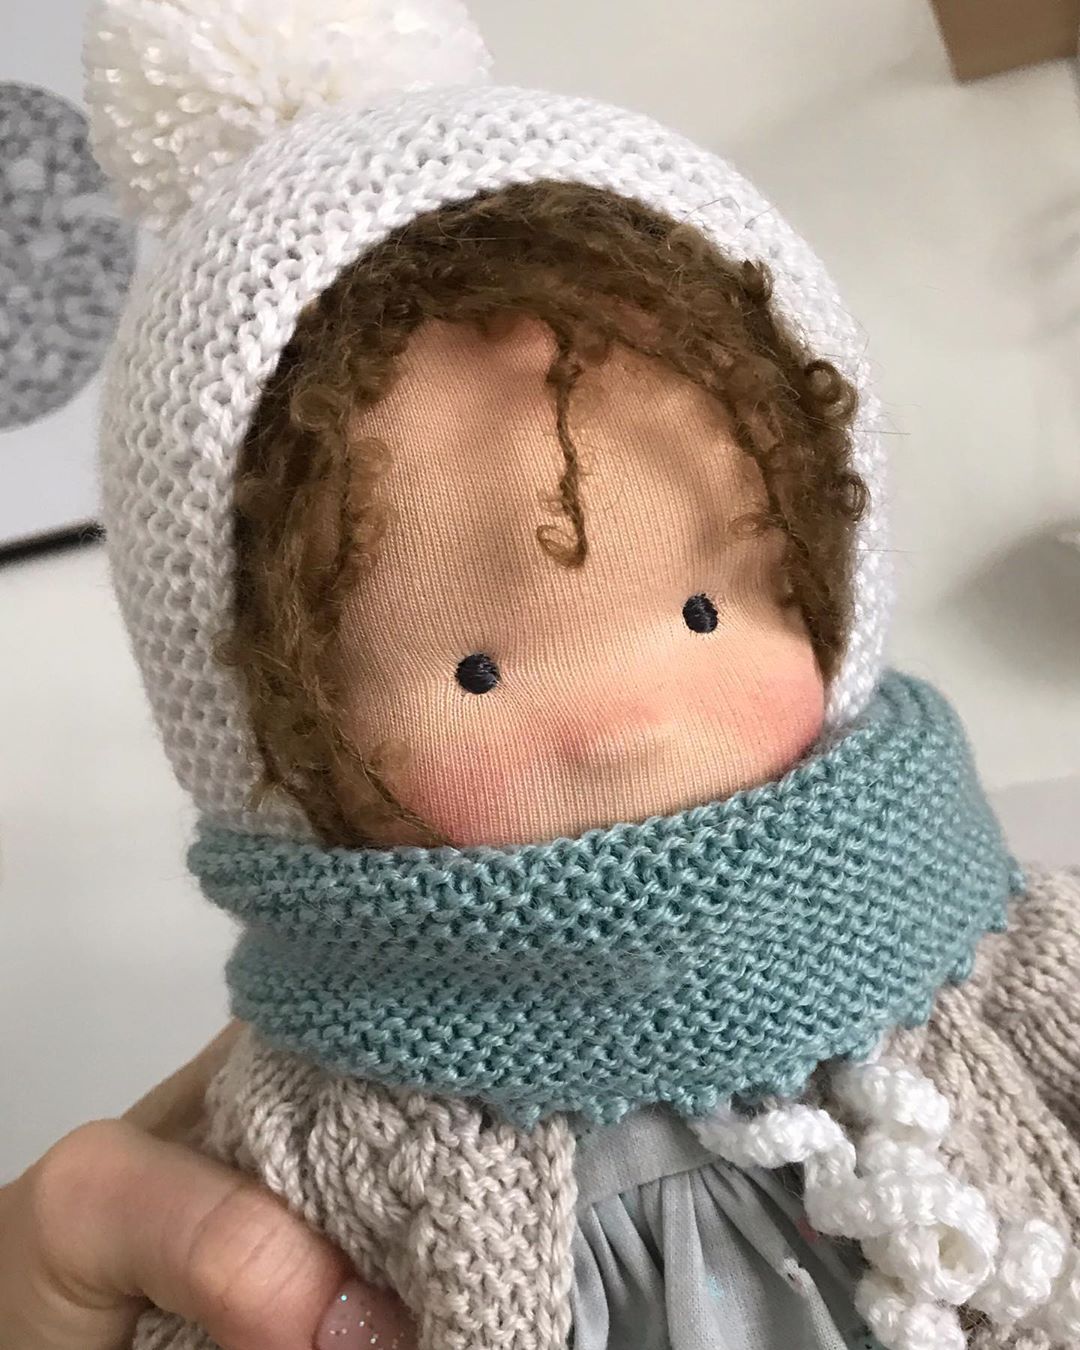 Handmade Knitted Doll - Carlin